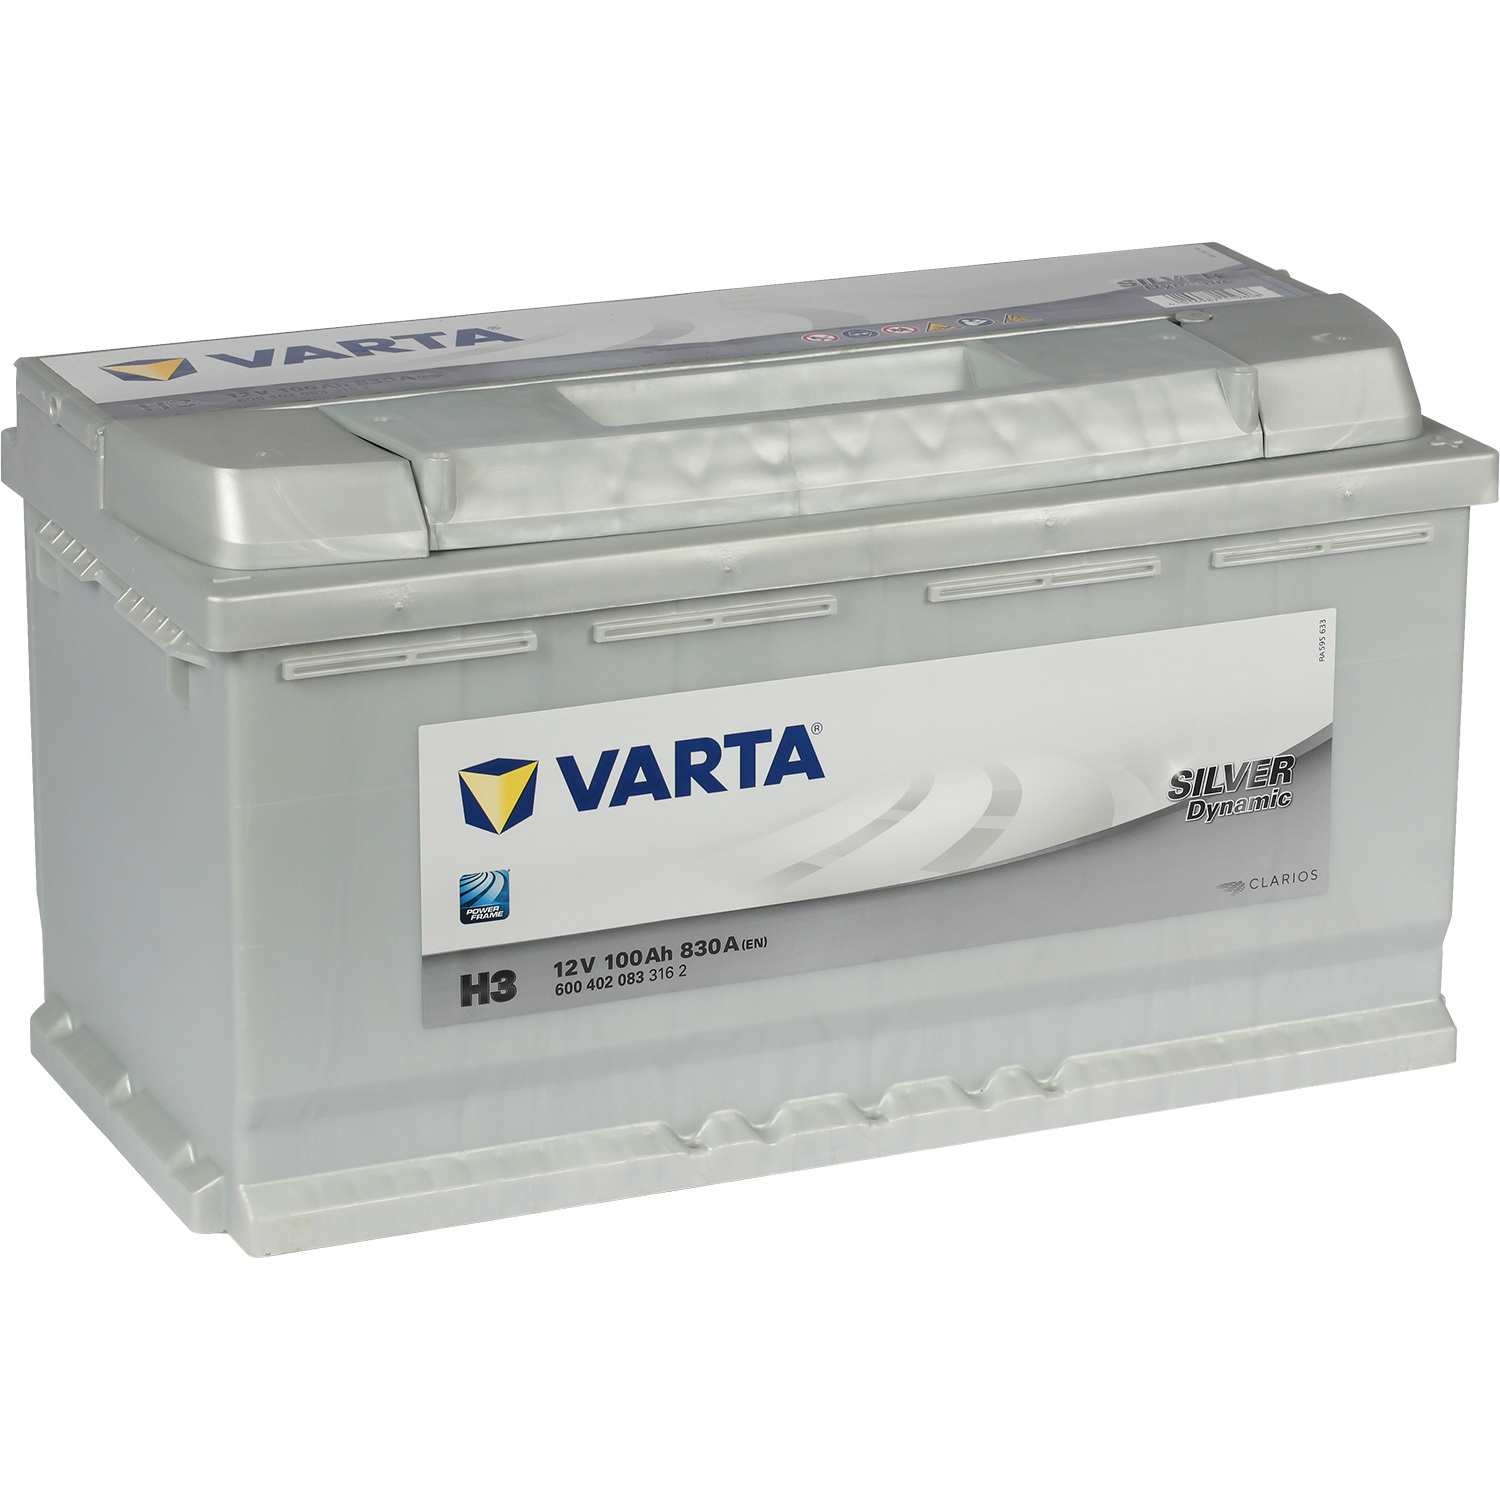 Varta Автомобильный аккумулятор Varta Silver Dynamic H3 100 Ач обратная полярность L5 varta автомобильный аккумулятор varta 80 ач обратная полярность l4